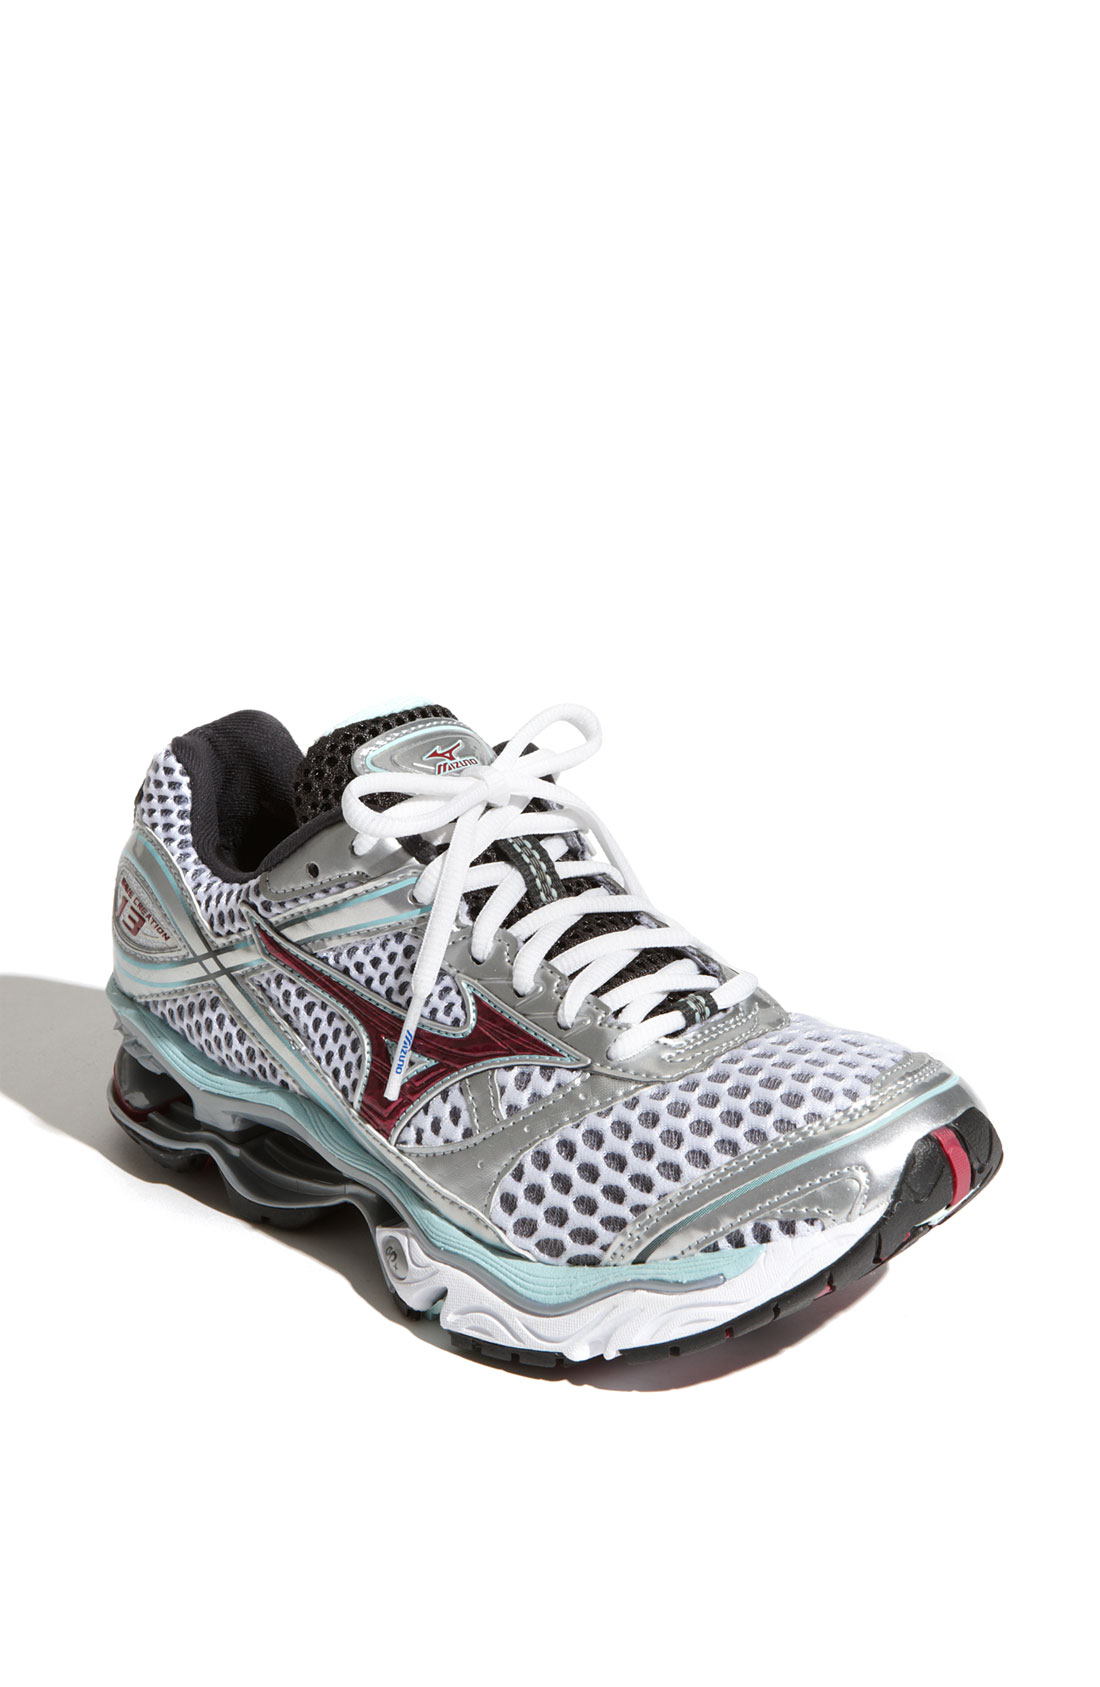 Mizuno Wave Creation 13 Running Shoe in Gray (grey/ silver/ red) | Lyst